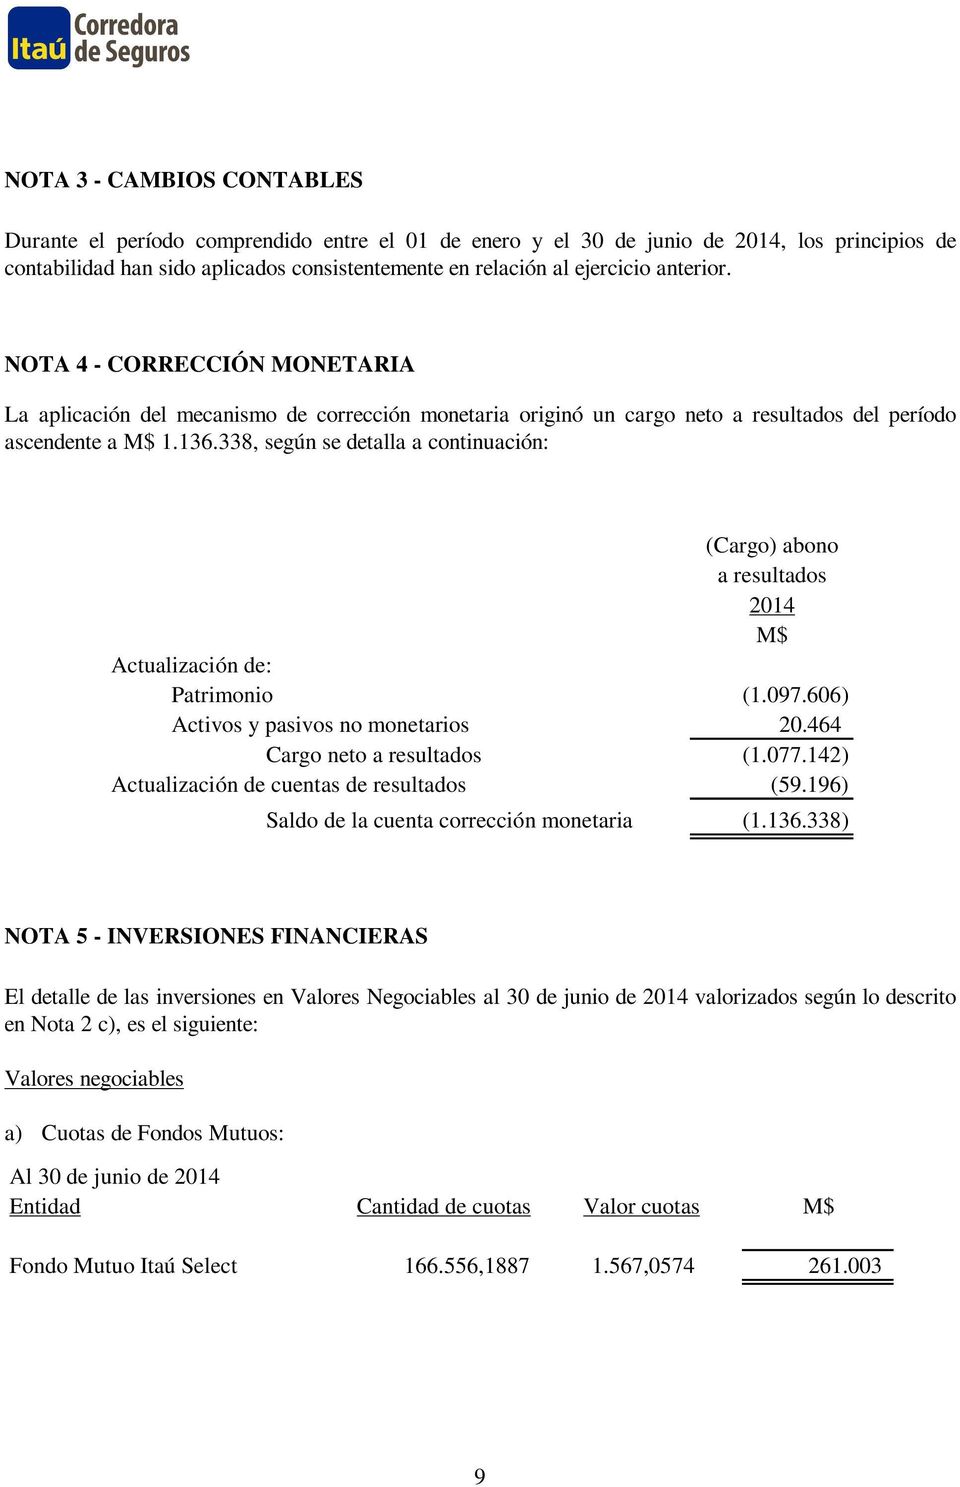 338, según se detalla a continuación: (Cargo) abono a resultados 2014 M$ Actualización de: Patrimonio (1.097.606) Activos y pasivos no monetarios 20.464 Cargo neto a resultados (1.077.